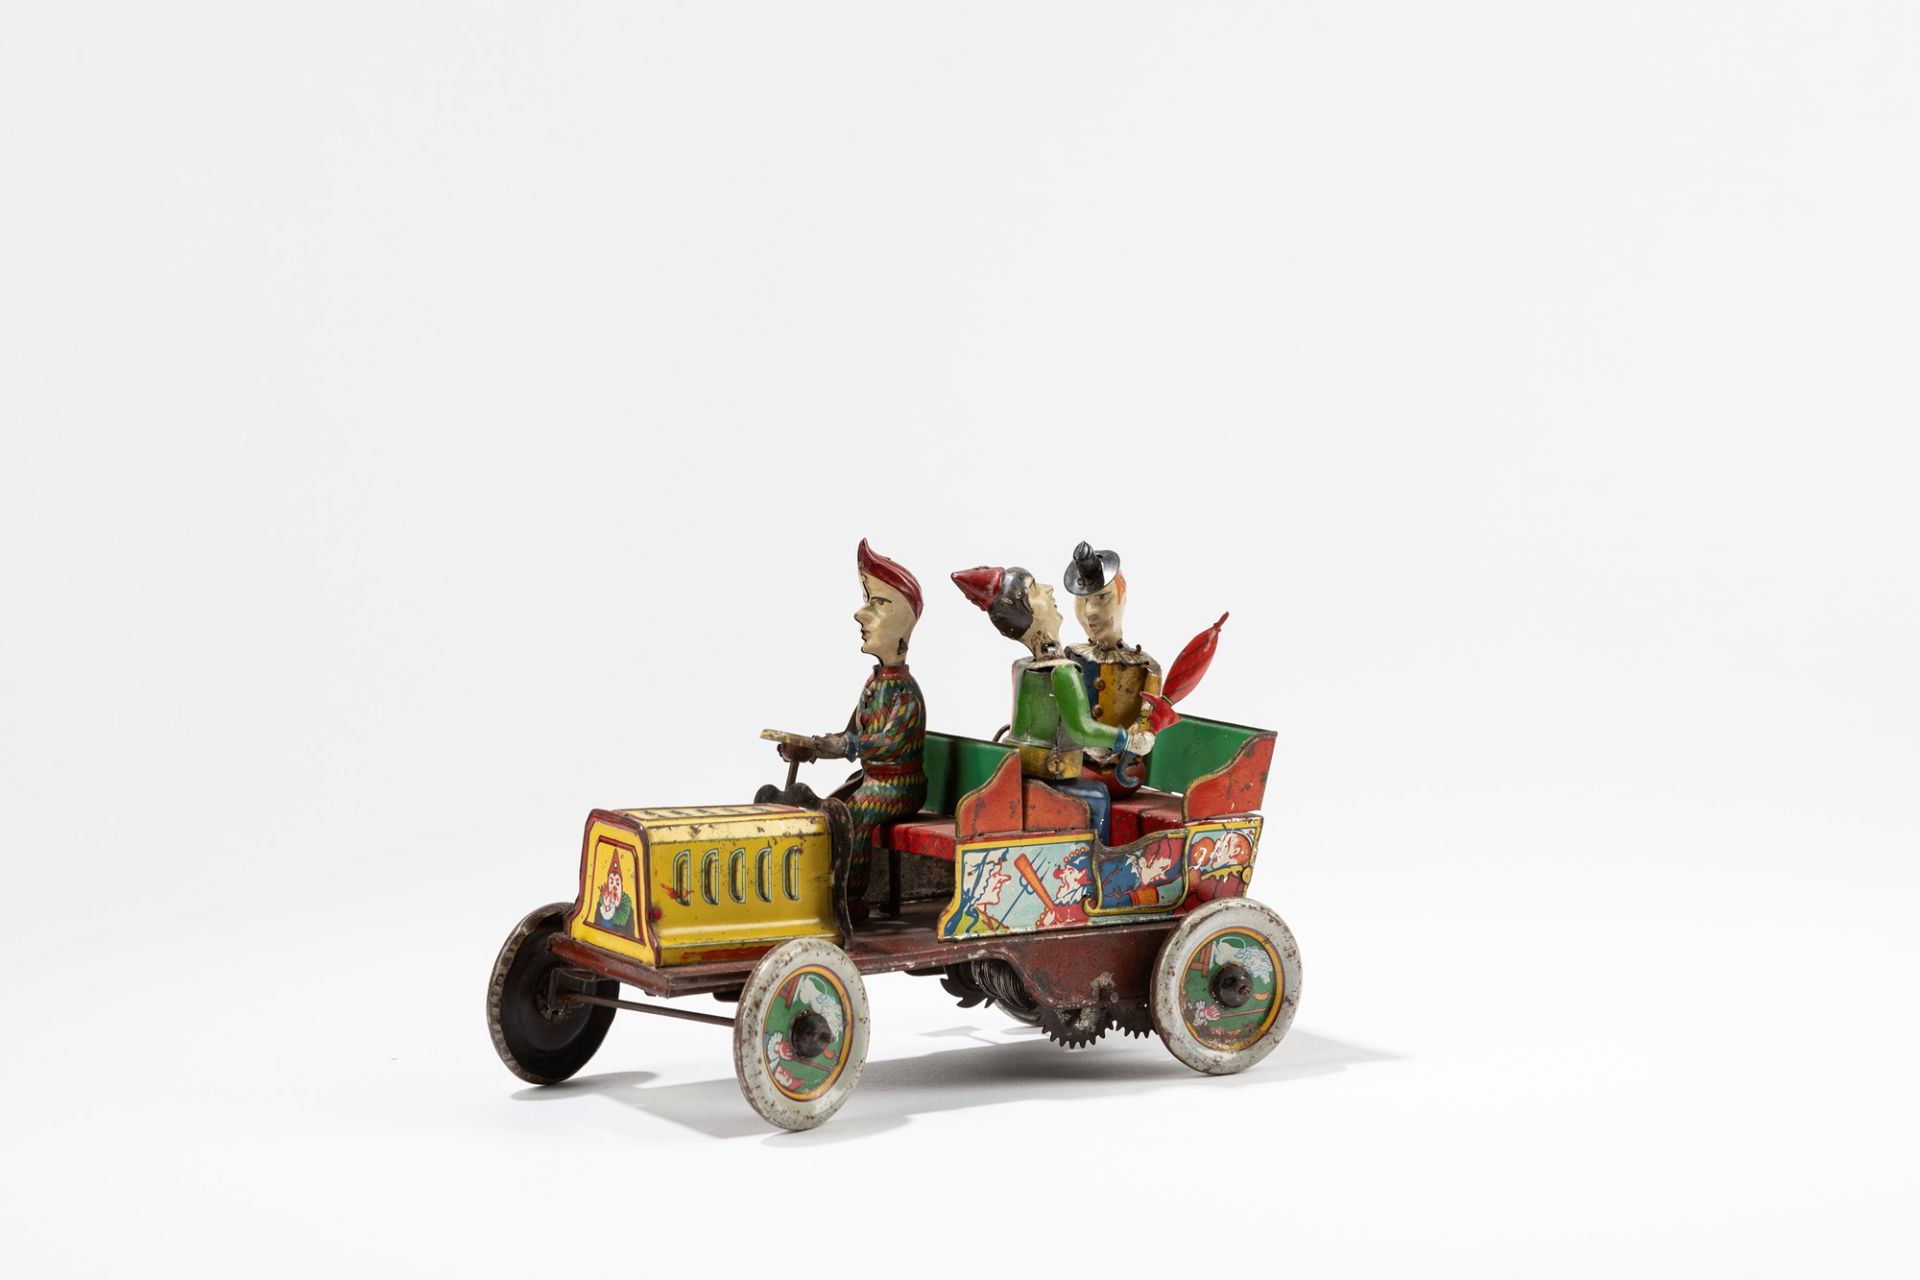 Hans Eberl - Car with three clowns: "Ta-Ra-Ra-Boom", 1920-1925